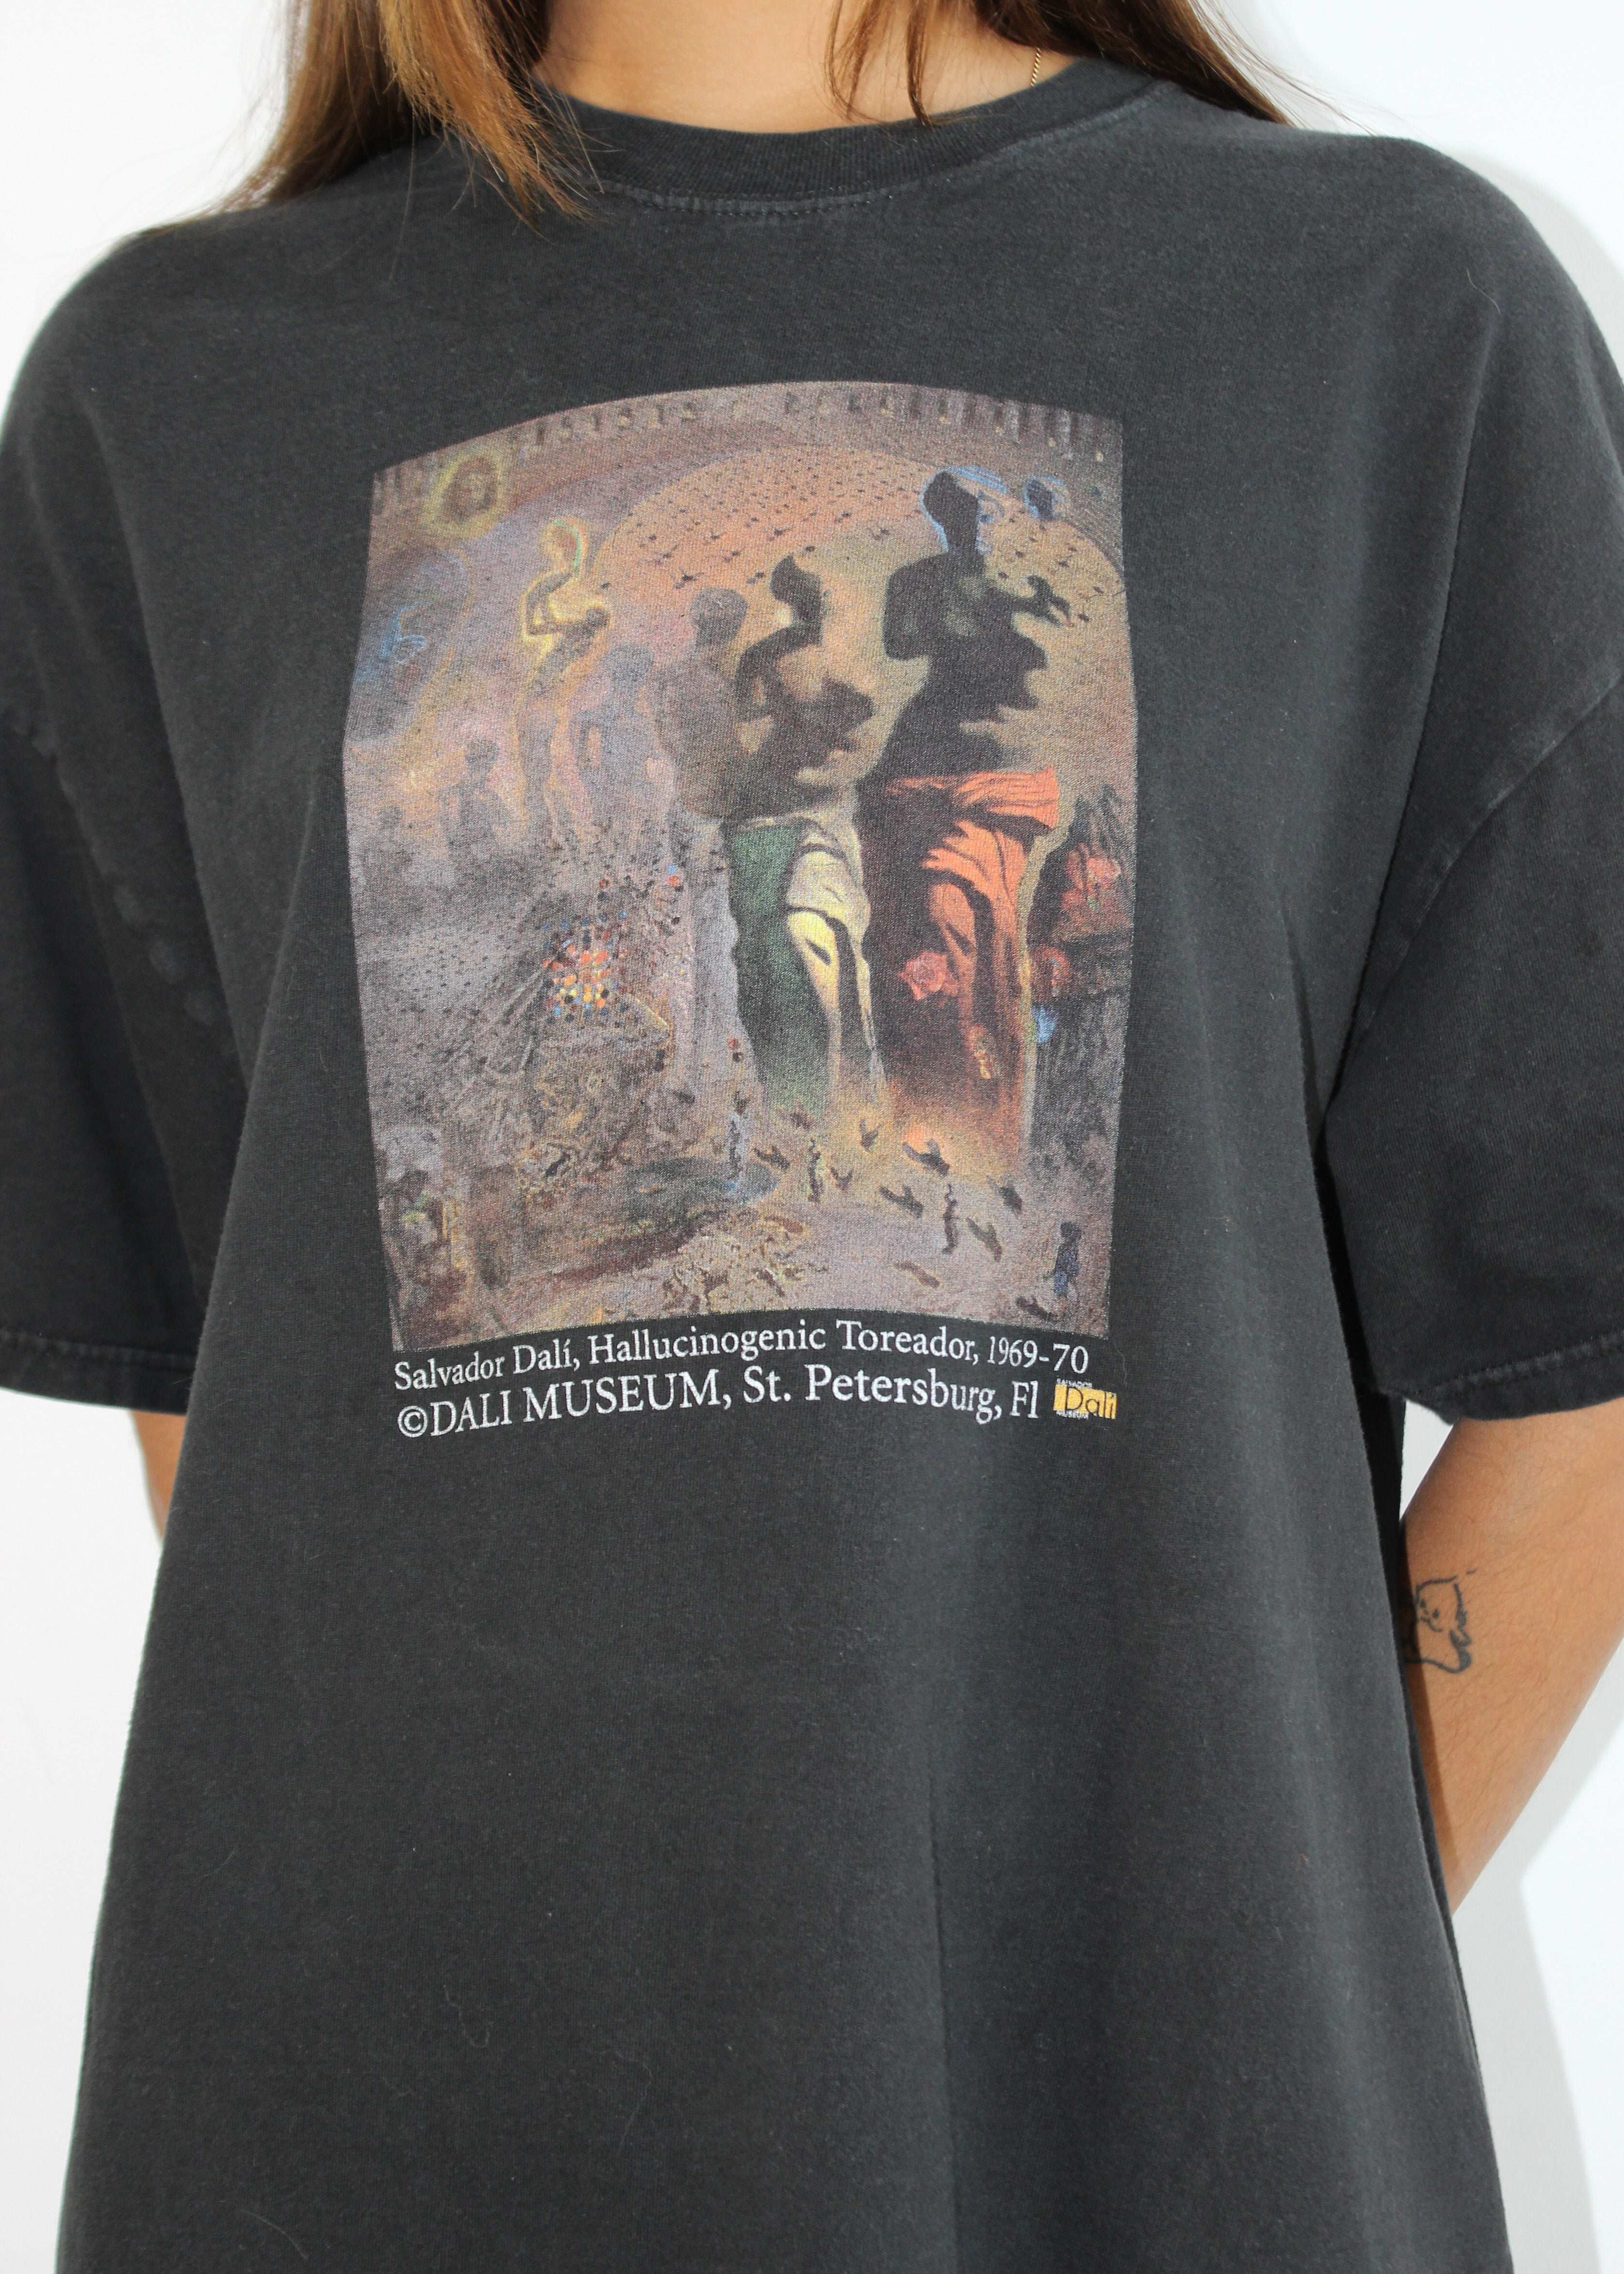 Salvador Dali Museum T-shirt (XL)